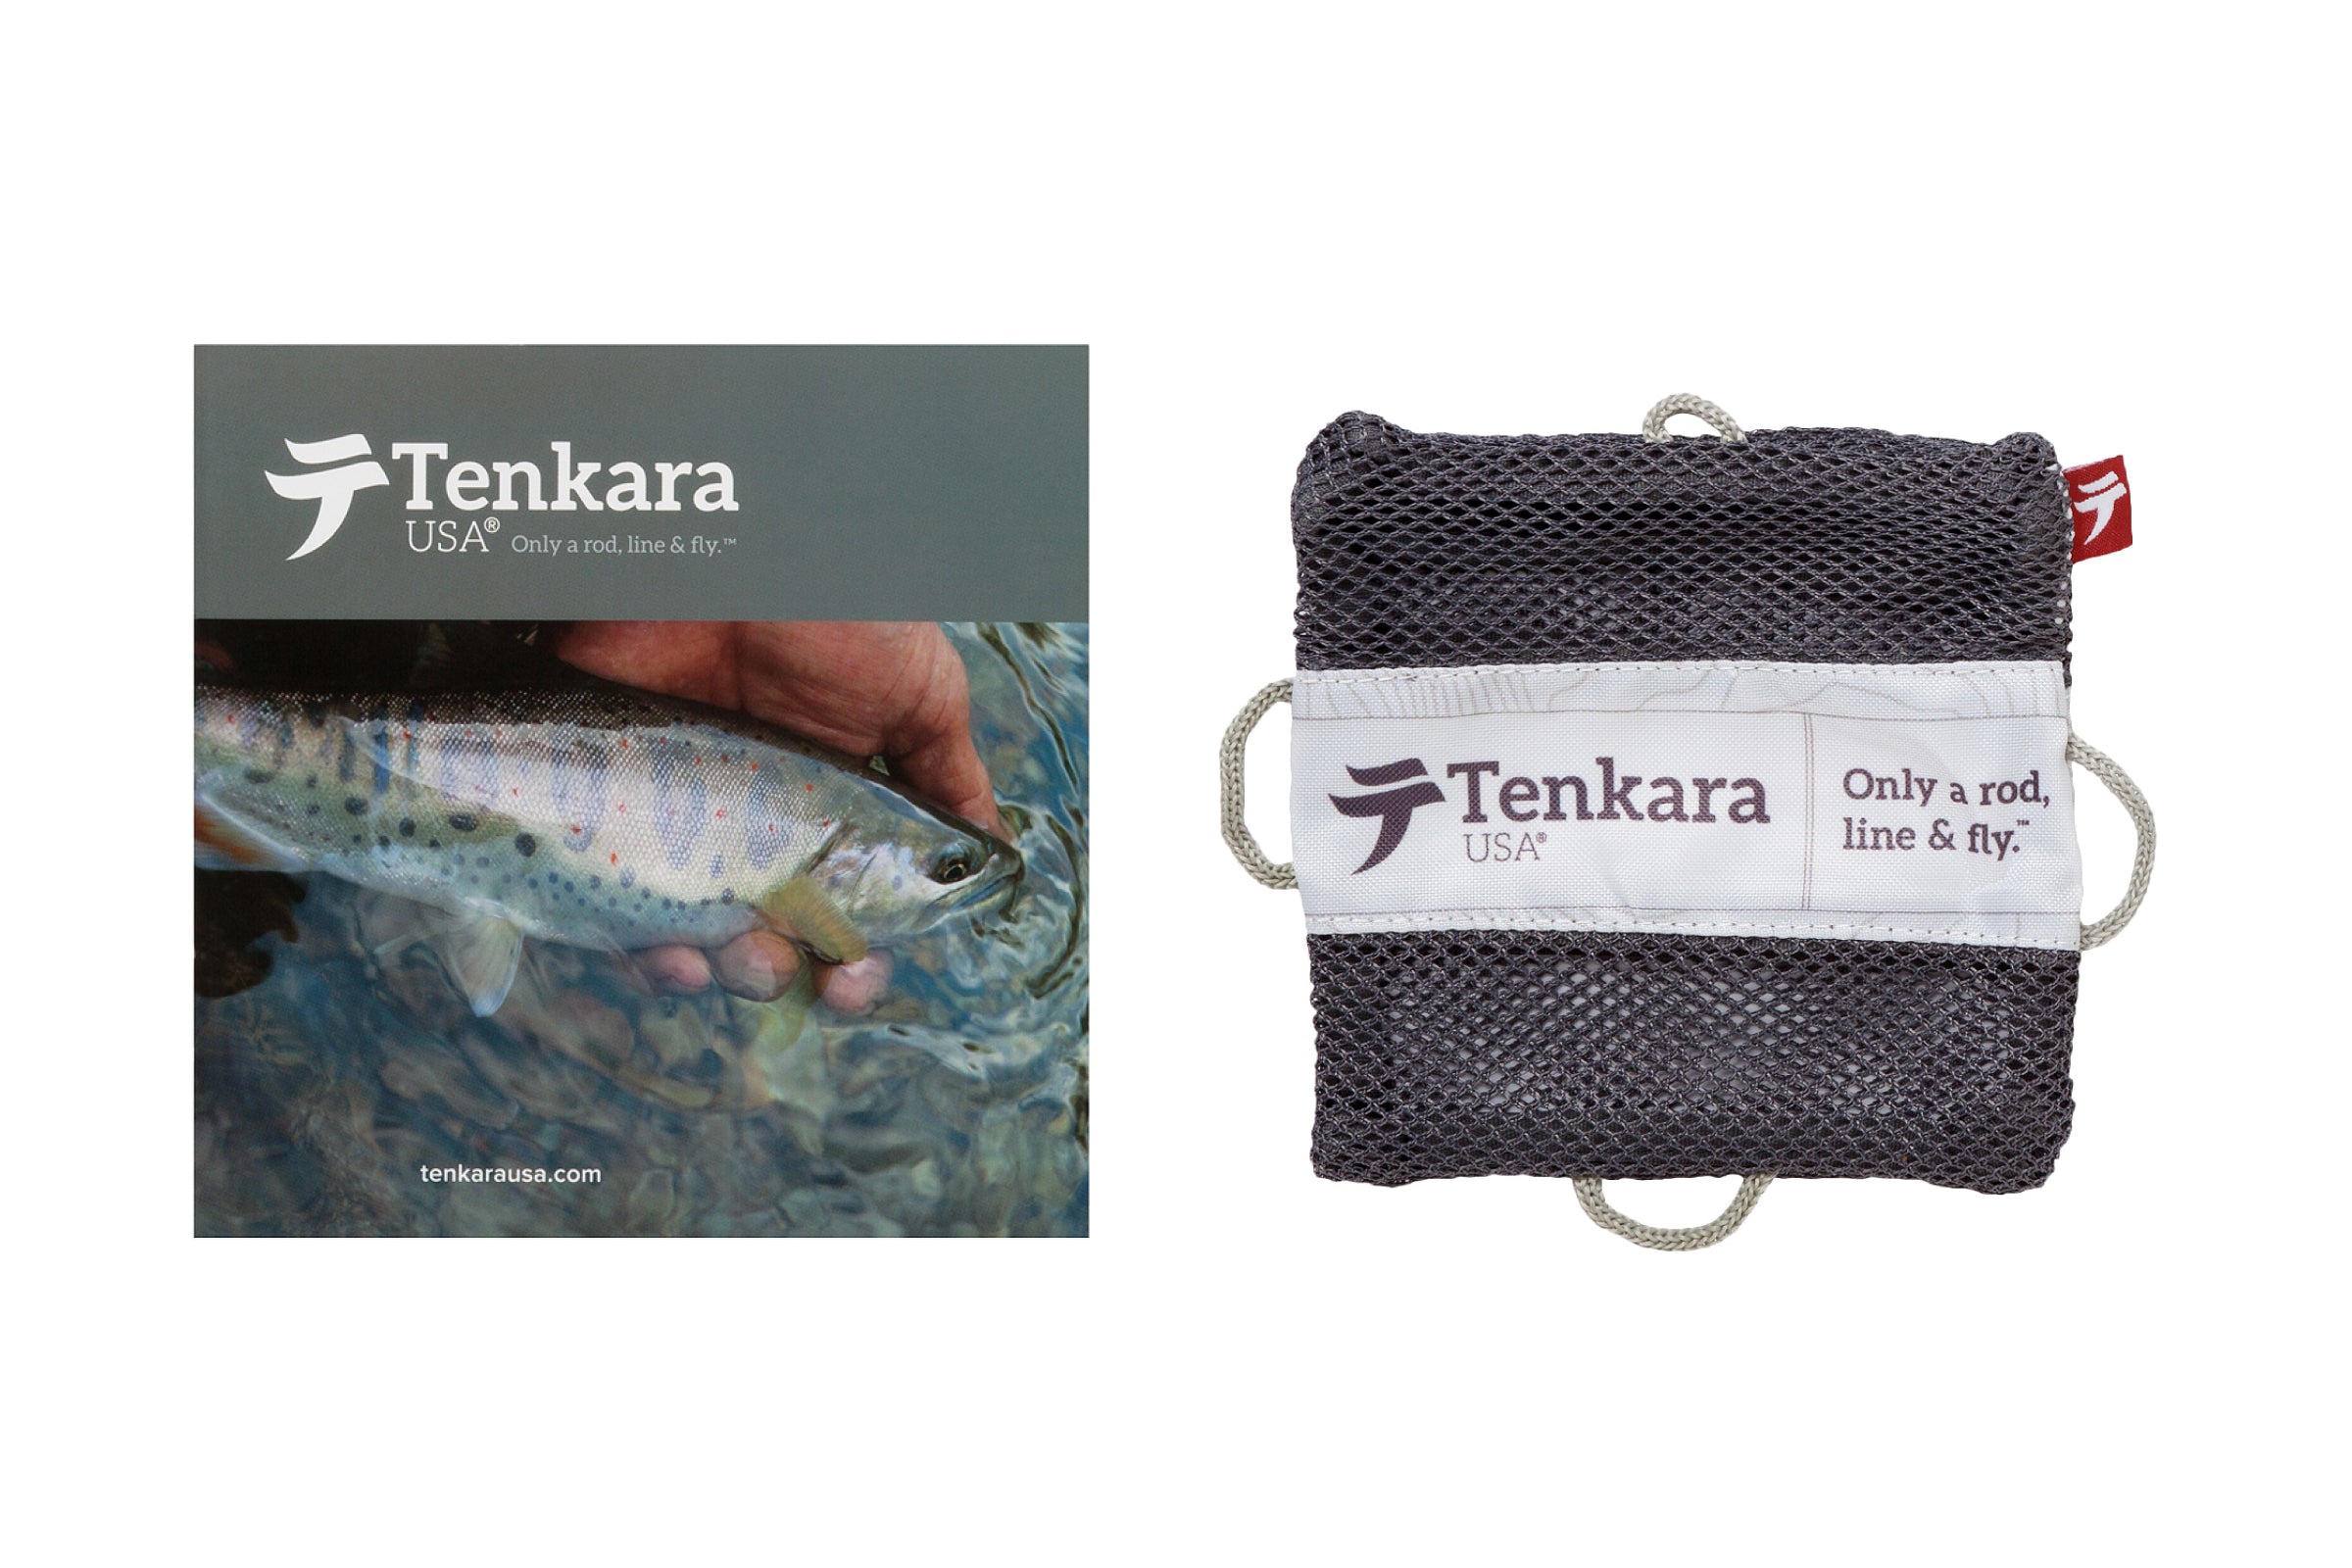  Complete Tenkara Kit by Tenkara USA® Includes: Keeper